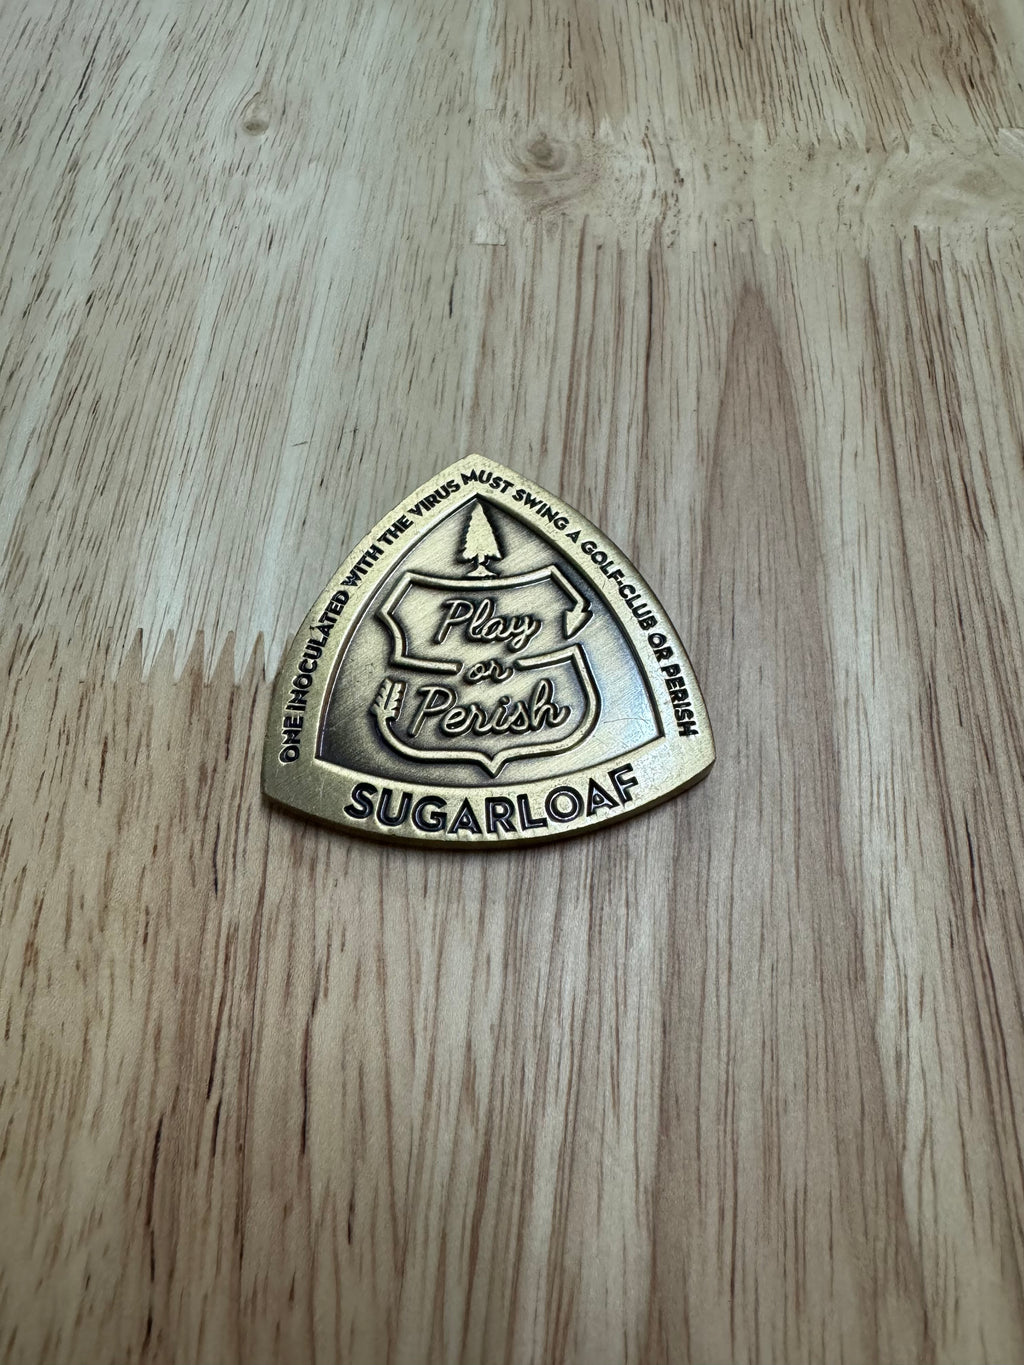 Sugarloaf Social Club Series 1 Challenge Coin #75